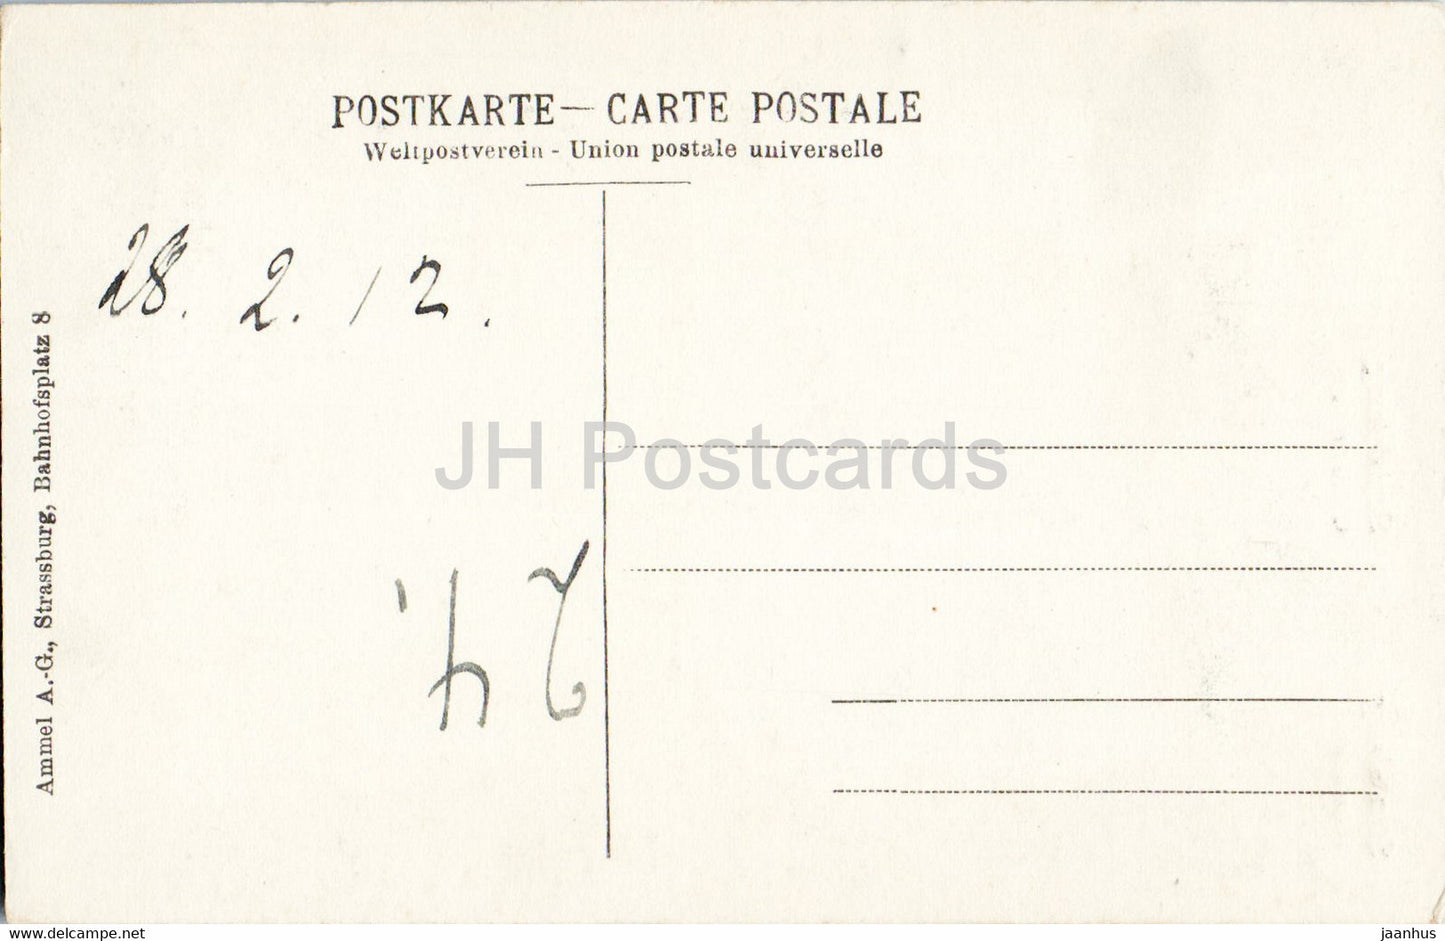 Strasbourg i E - Strasbourg - Munster - Cathédrale - cathédrale - 981 - carte postale ancienne - 1912 - France - utilisé